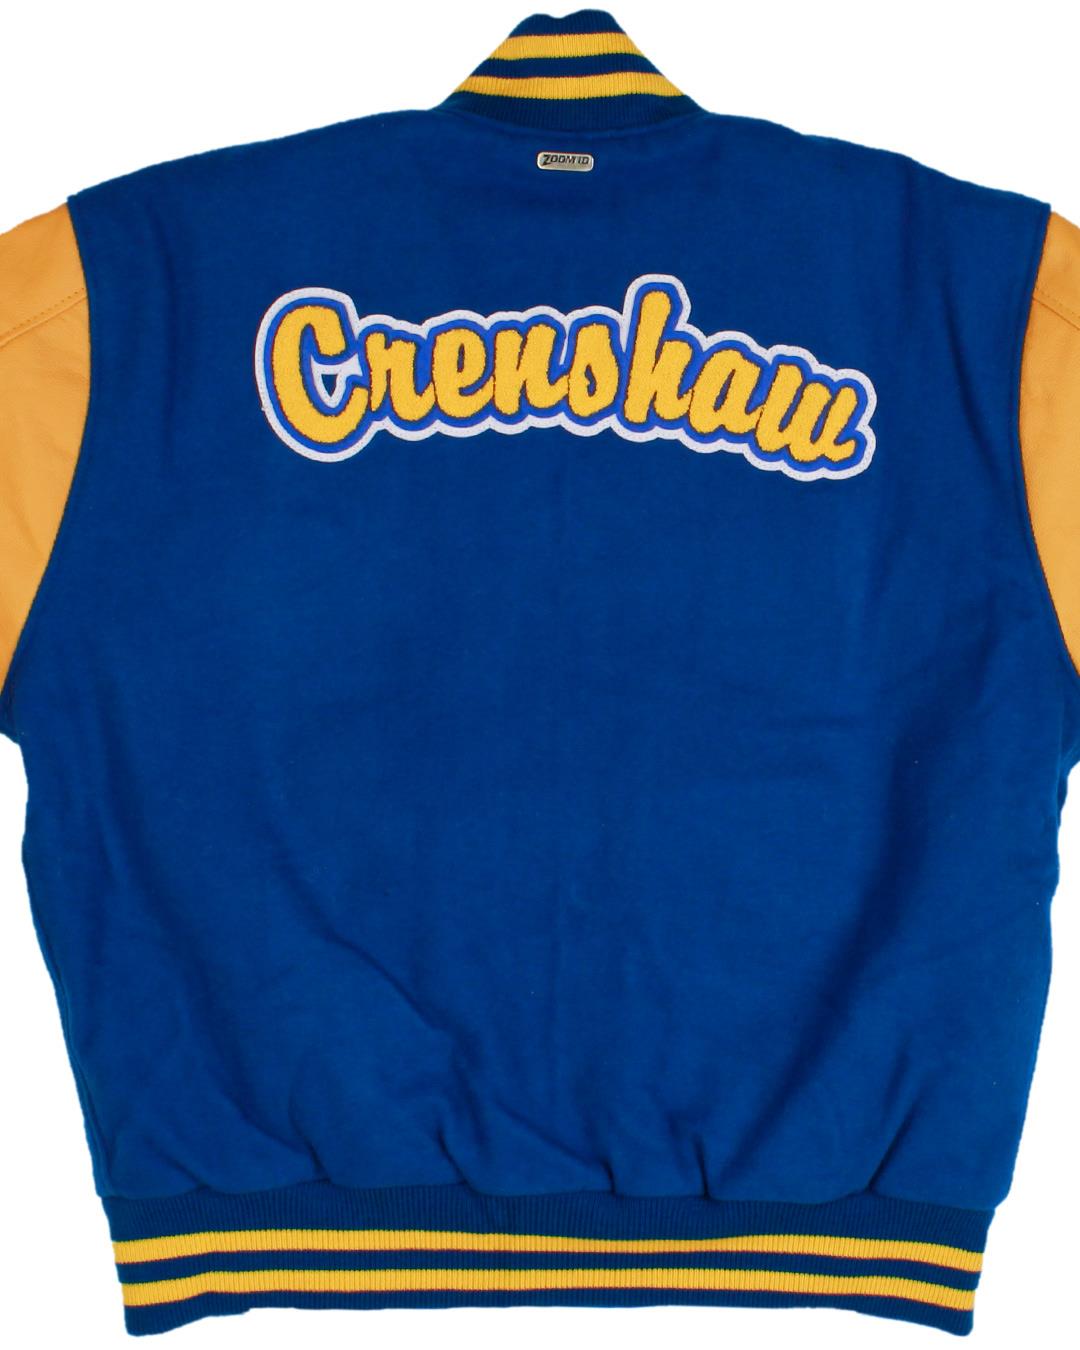 Crenshaw High School Cougars Varsity Jacket, Los Angeles, CA - Back